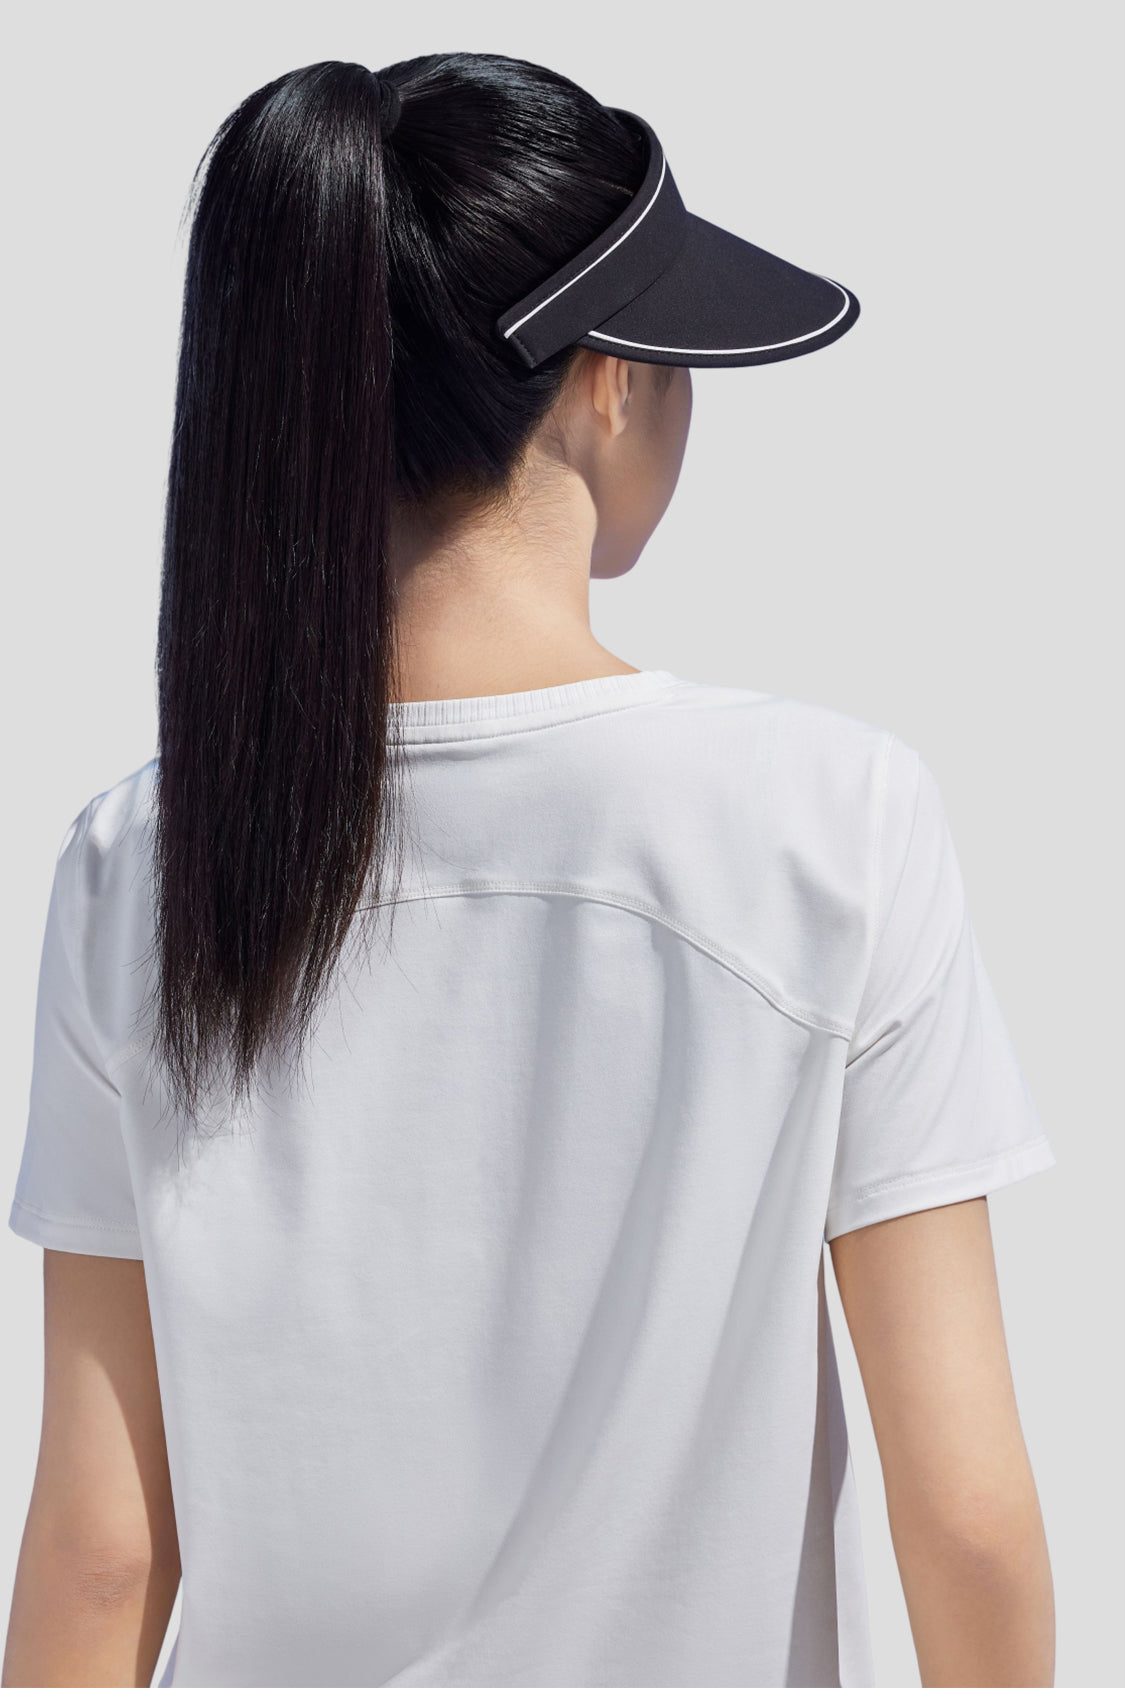 beneunder women's outdoor sun protection sports hat upf50+ #color_black